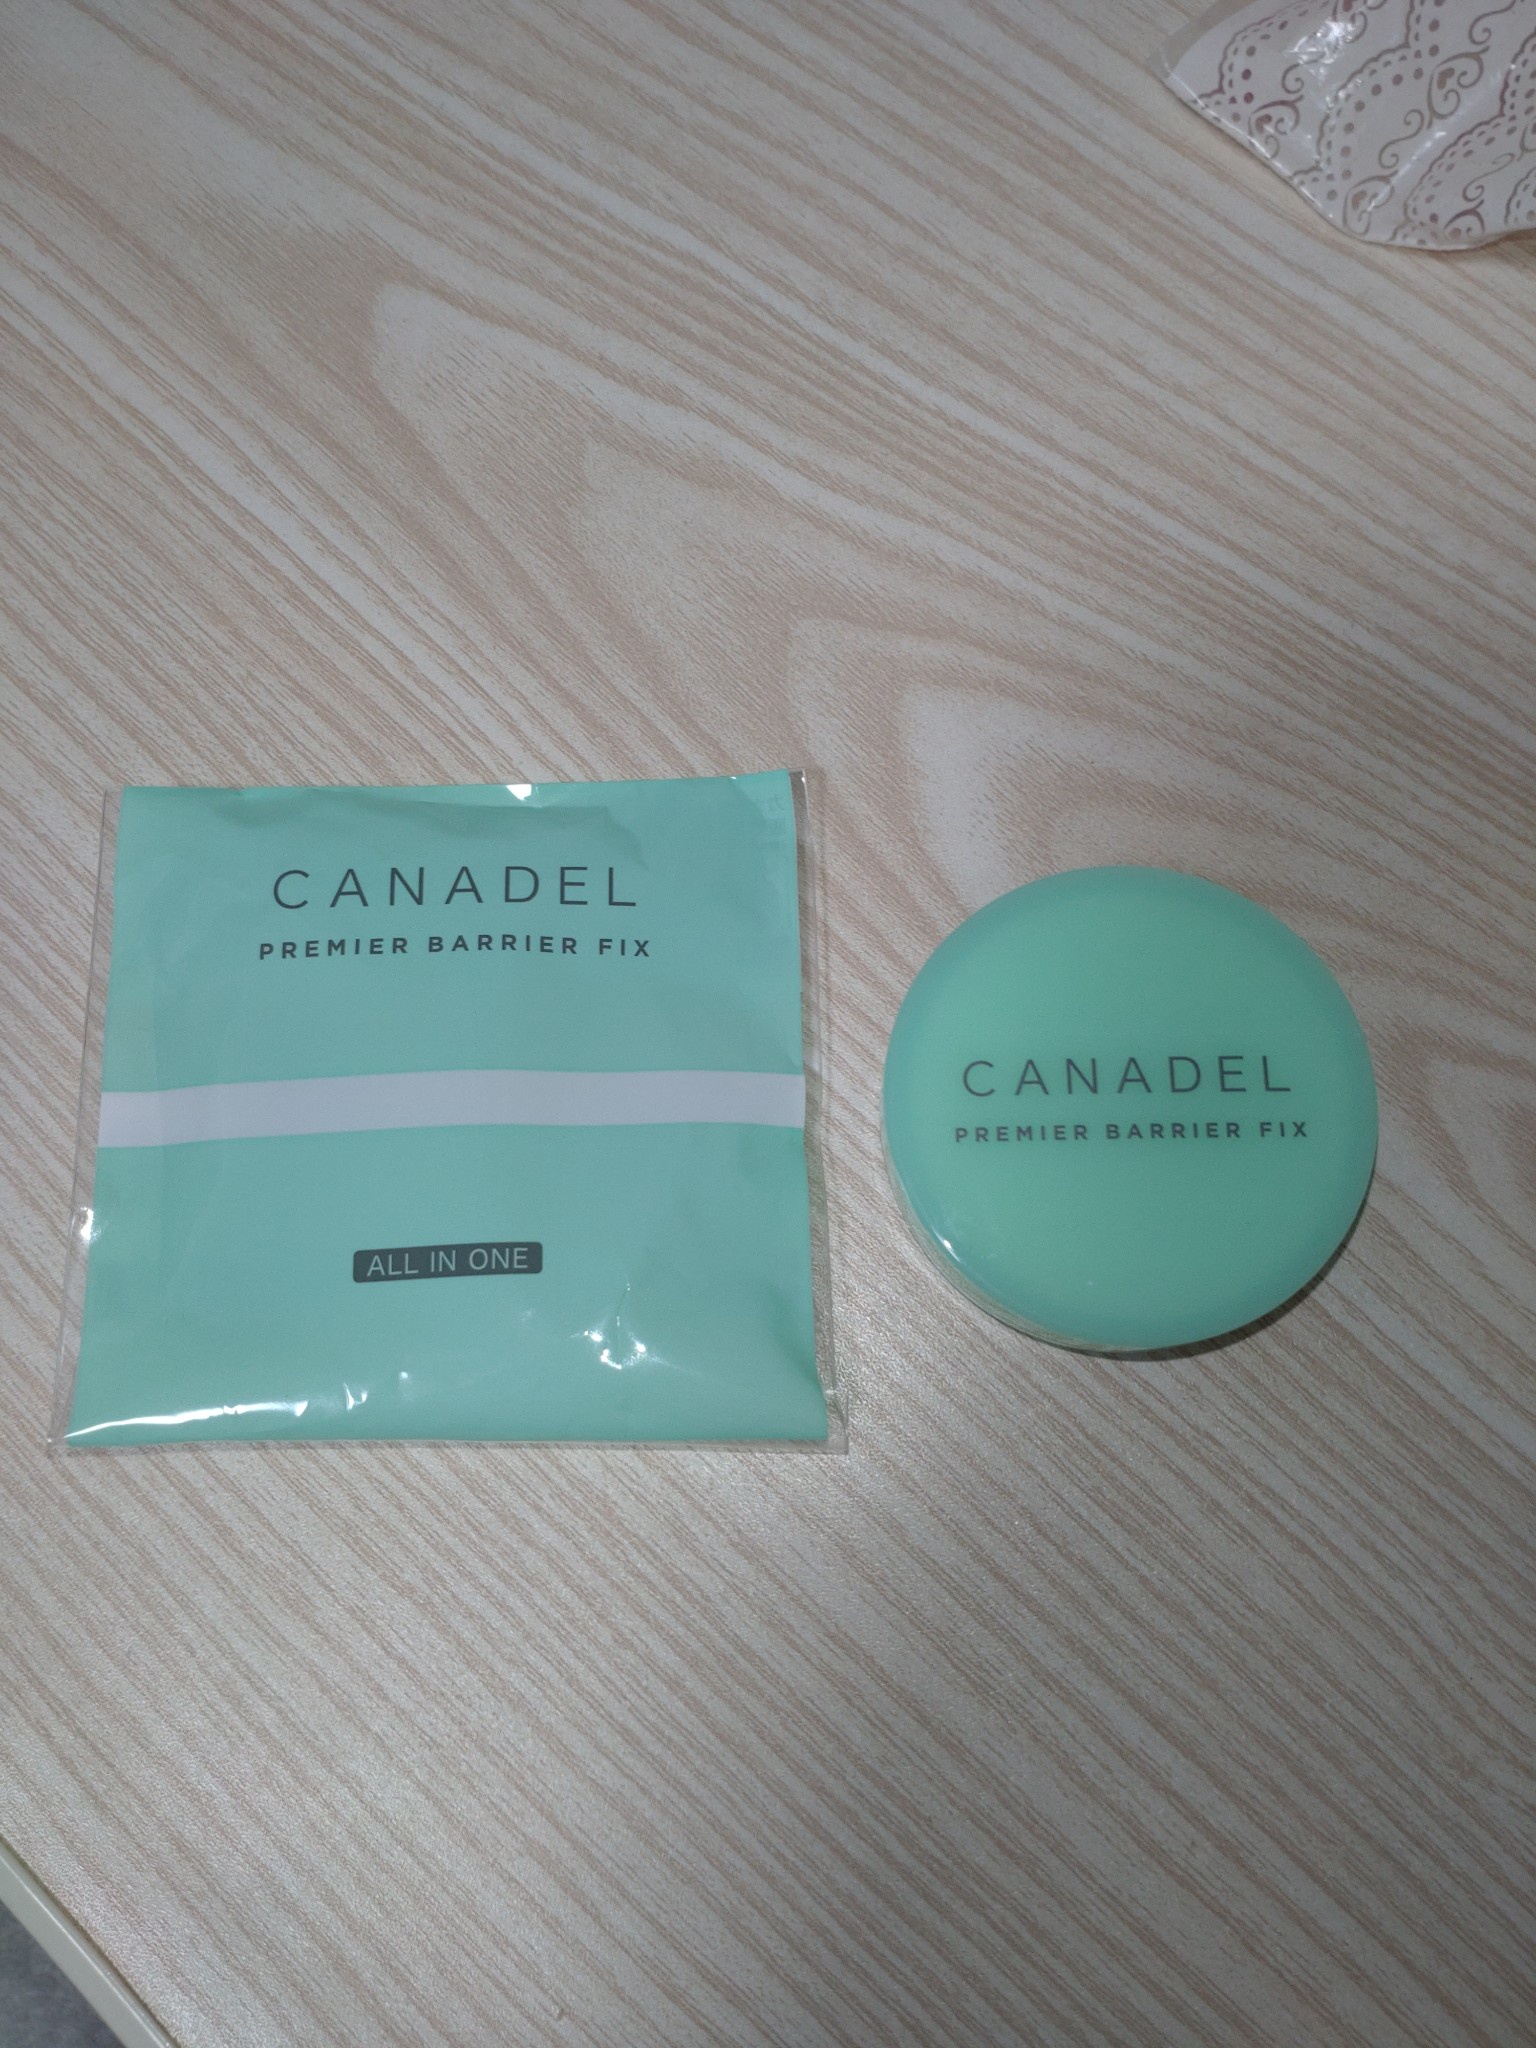 CANADEL(カナデル) / カナデル プレミアバリアフィックスの公式商品 